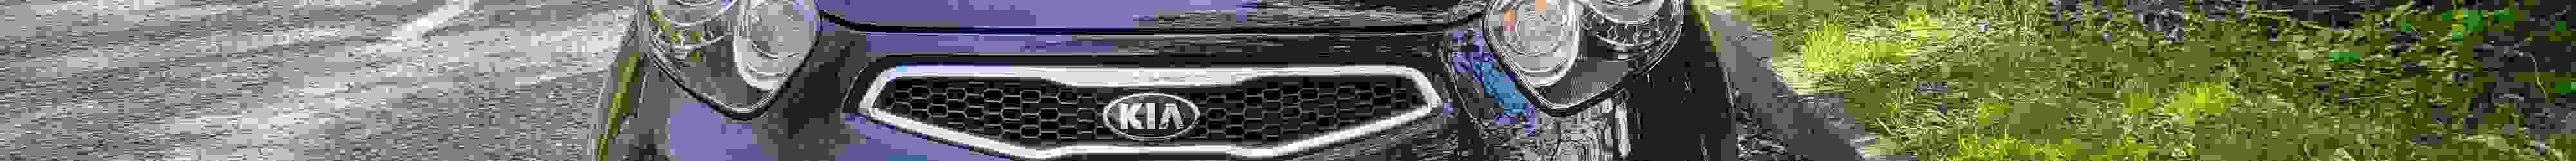 Used 2014 Kia Picanto 1.25 4 Galaxy Black at Kia Motors UK